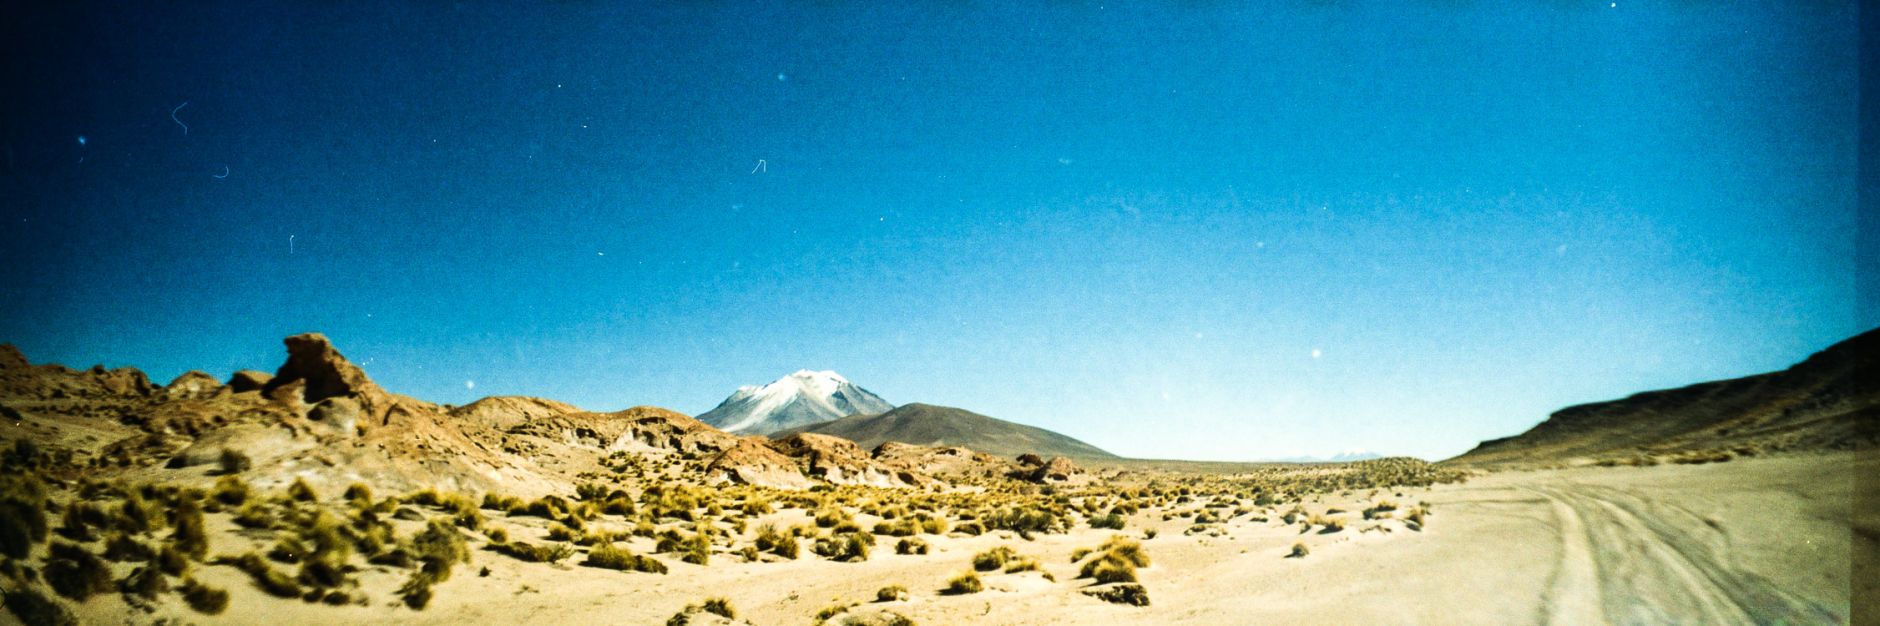 Chuguana Desert, Volcán Ollagüe, Bolivia